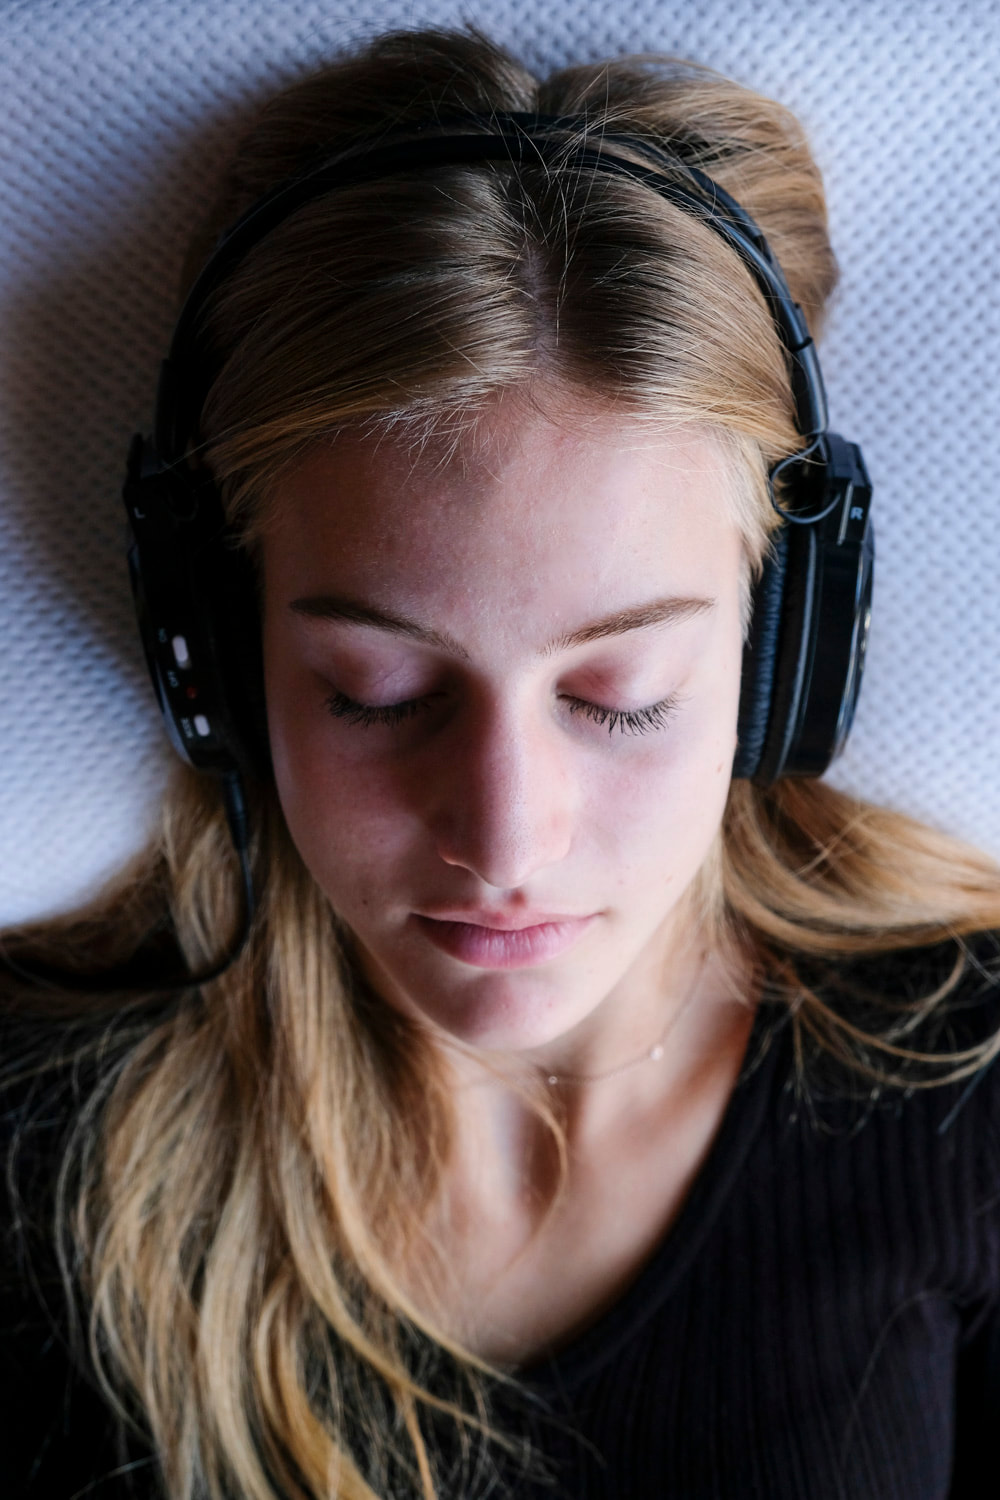 Blond girl sleeping with large headphones on